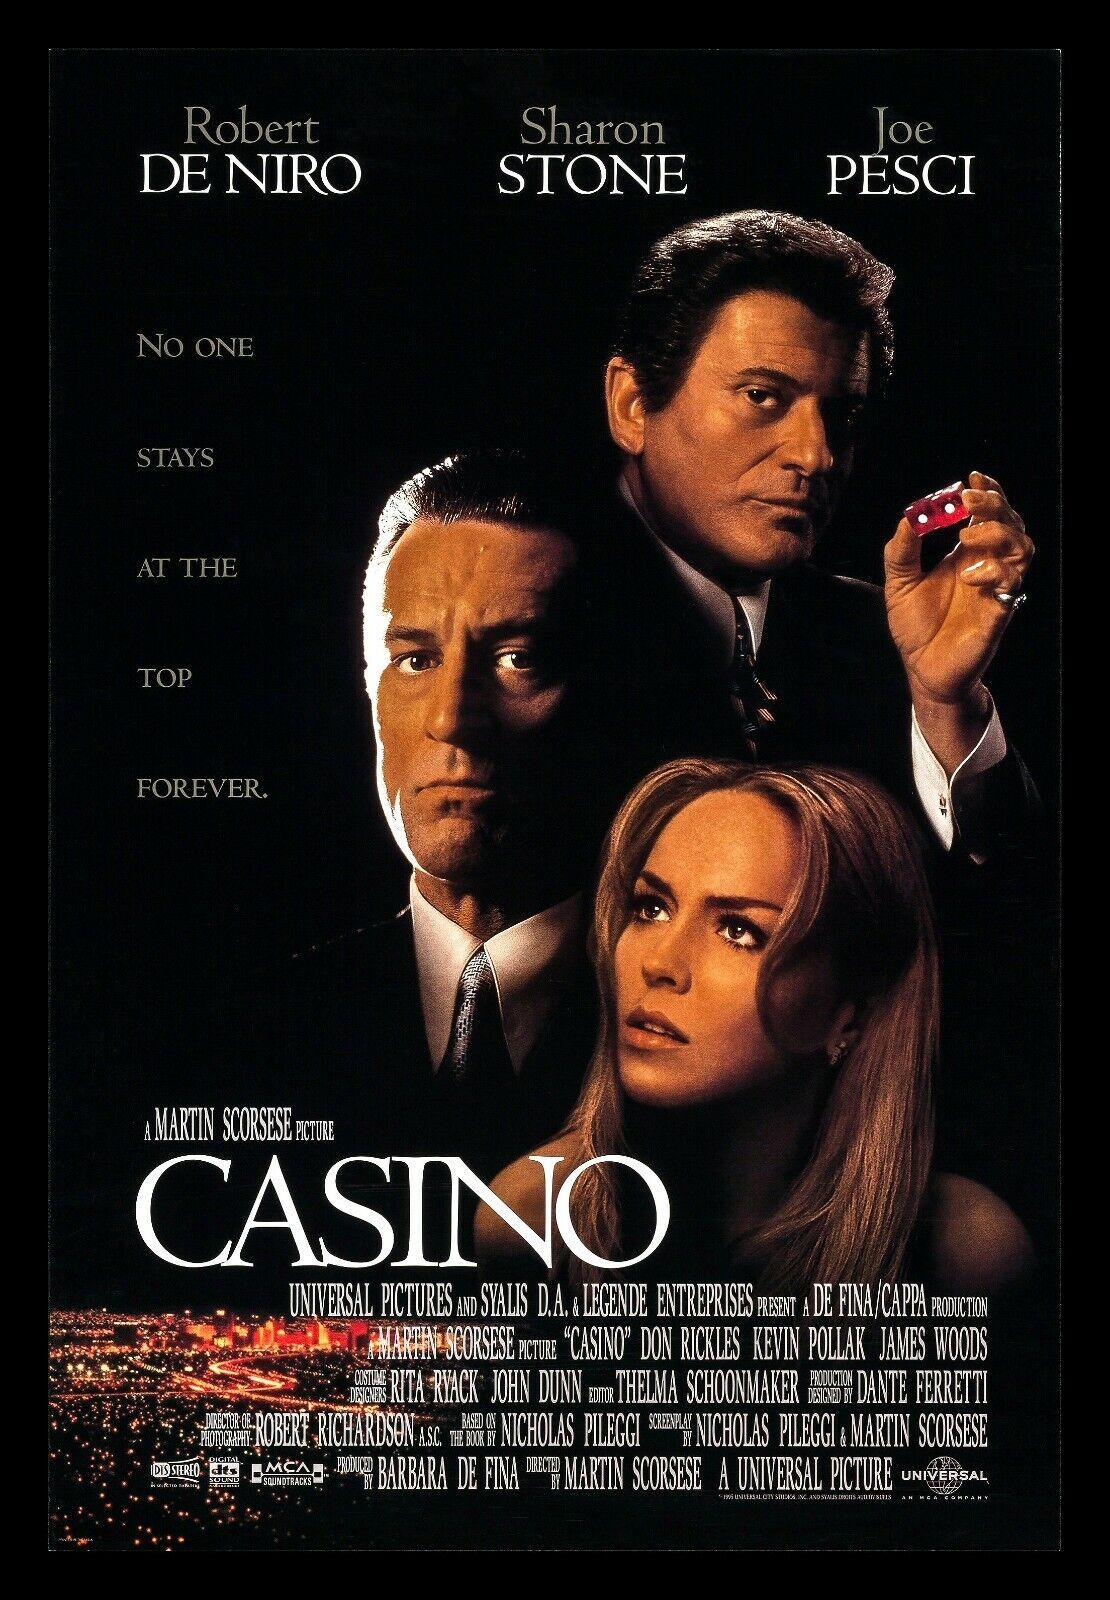 El cartel de El casino de Martin Scorsese